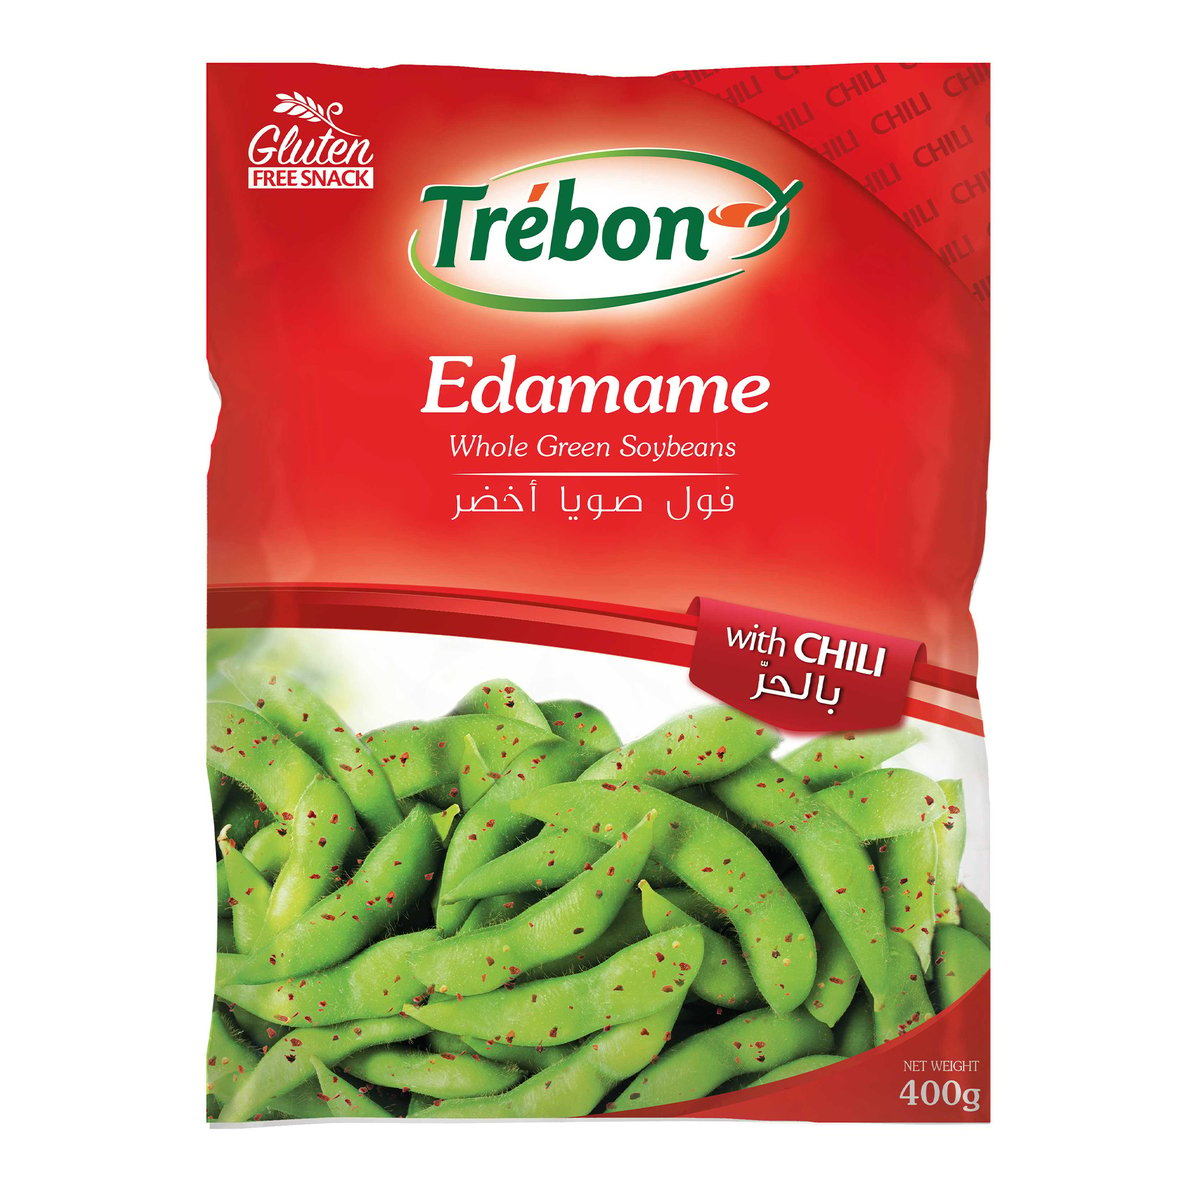 Trebon Edamame Green Soybeans with Chili Gluten Free 400g